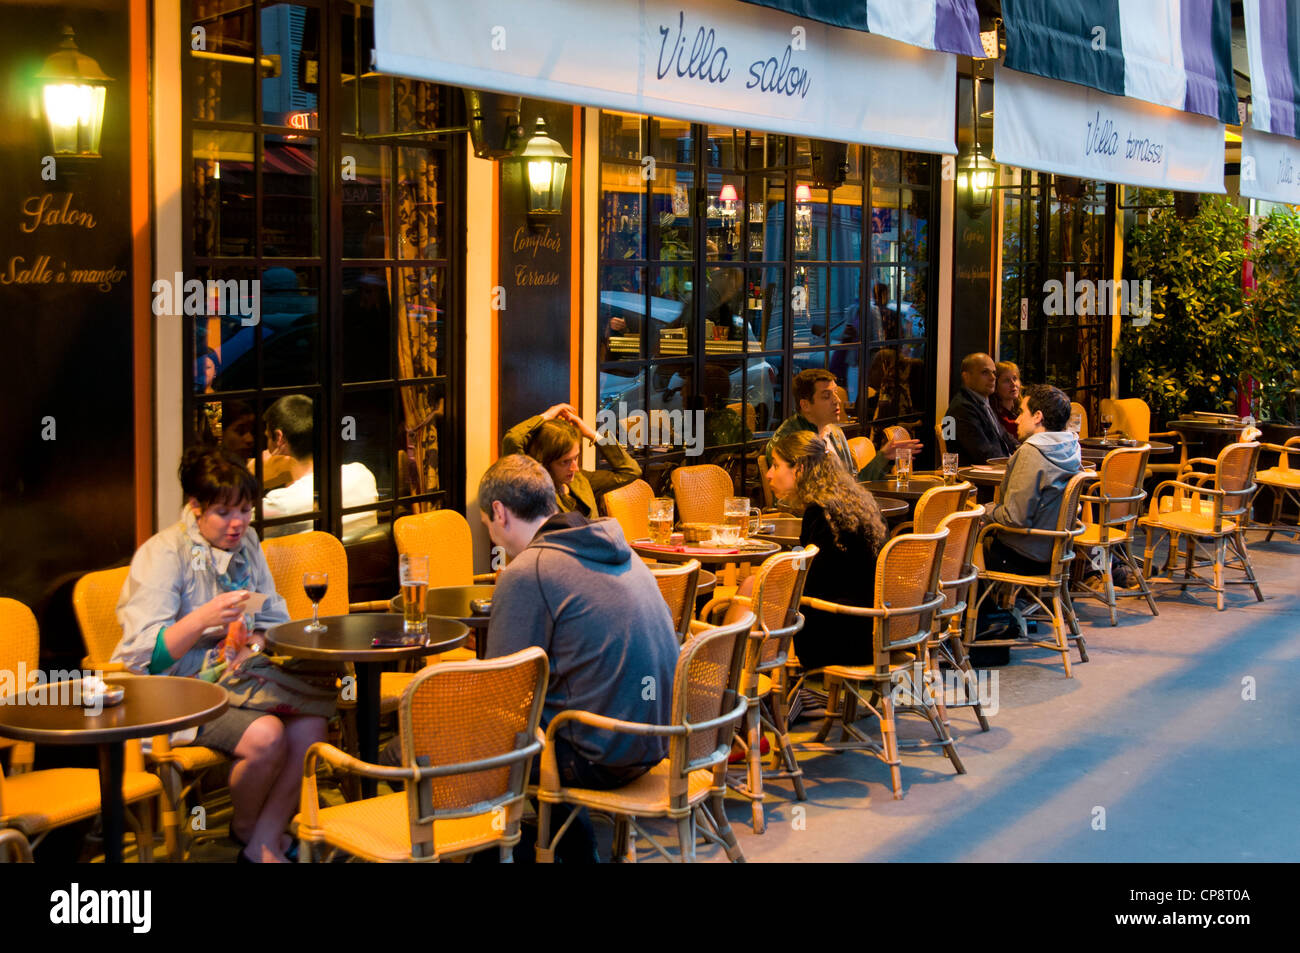 Street cafe Villa Salon, Paris, France Stock Photo - Alamy